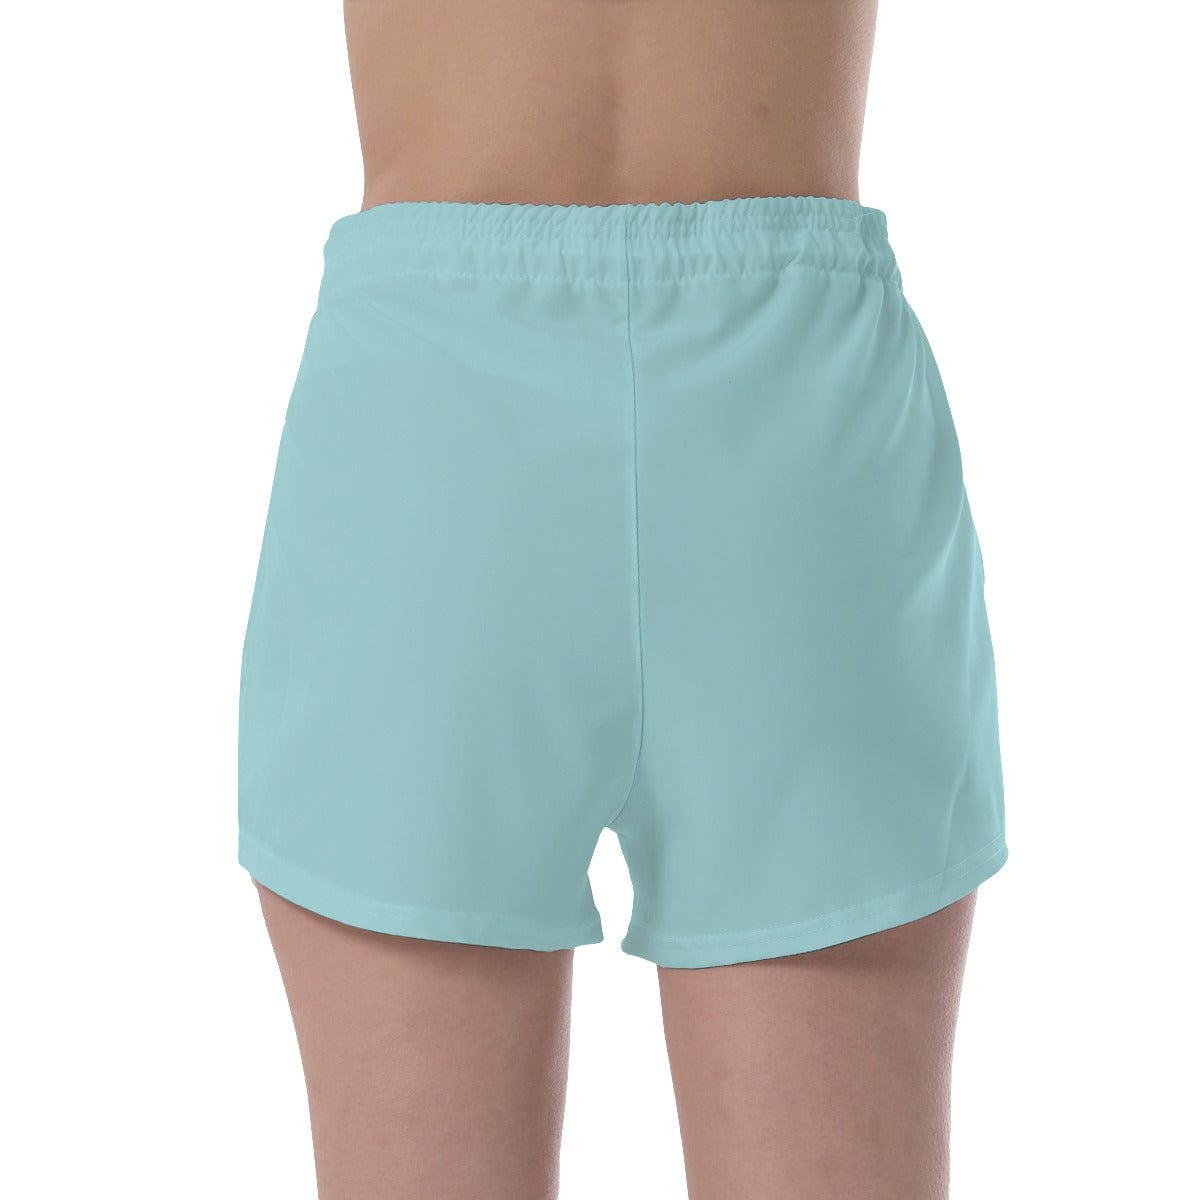 Yoycol Hibiscus Cove Teal - Women's Short Pants